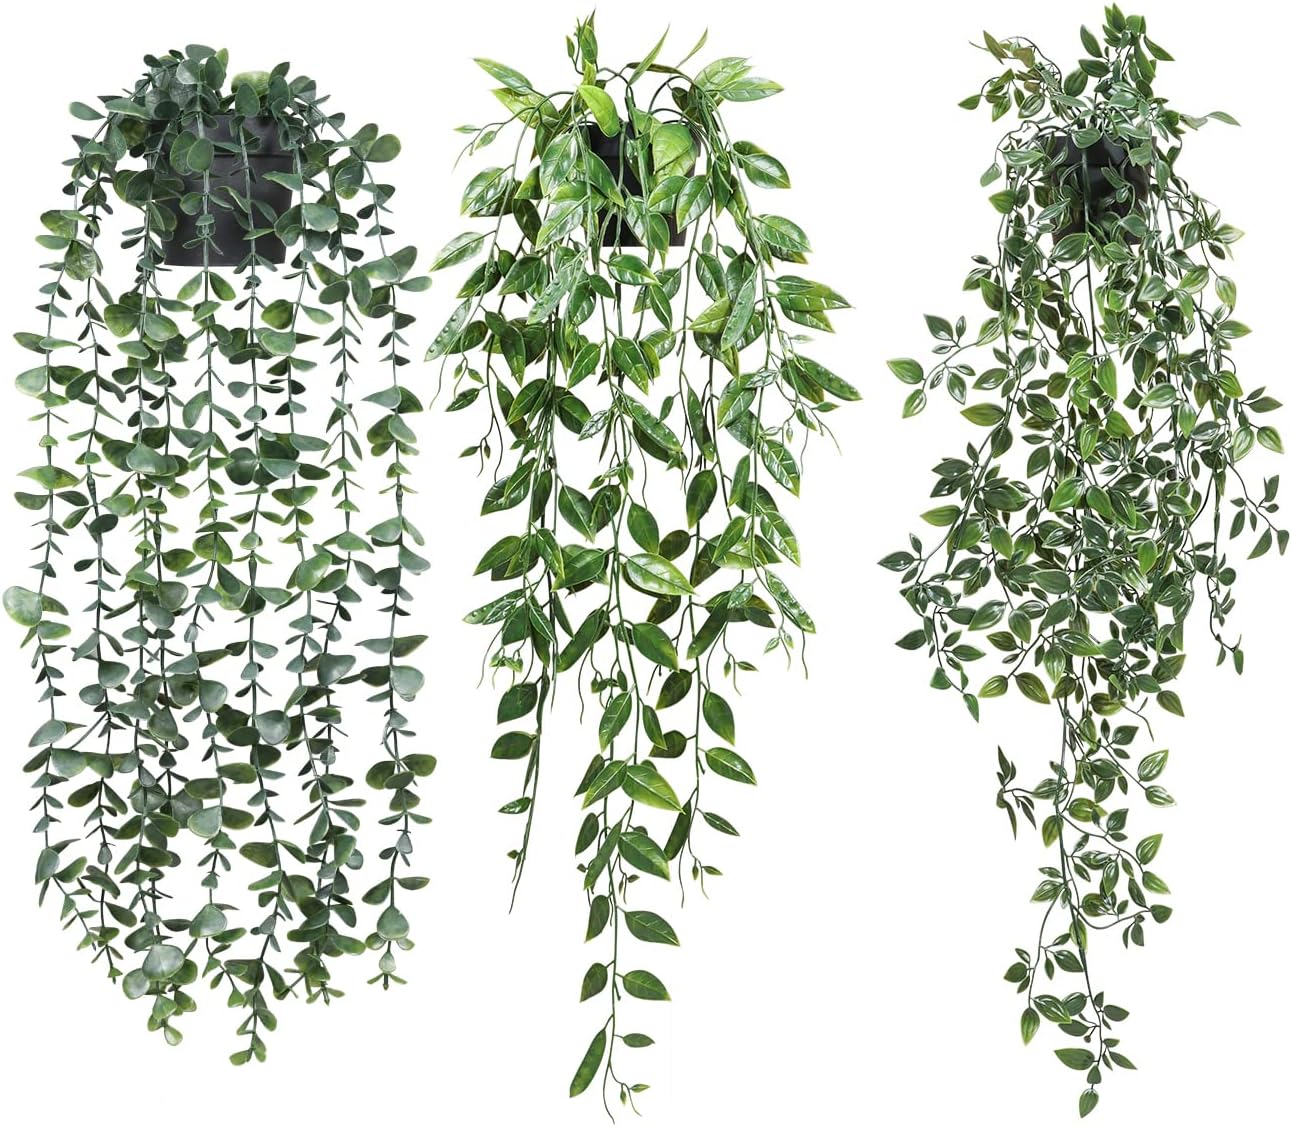 Serene Verde: Artificial Hanging Plants 3 Pack for Effortless Indoor Greenery Decor